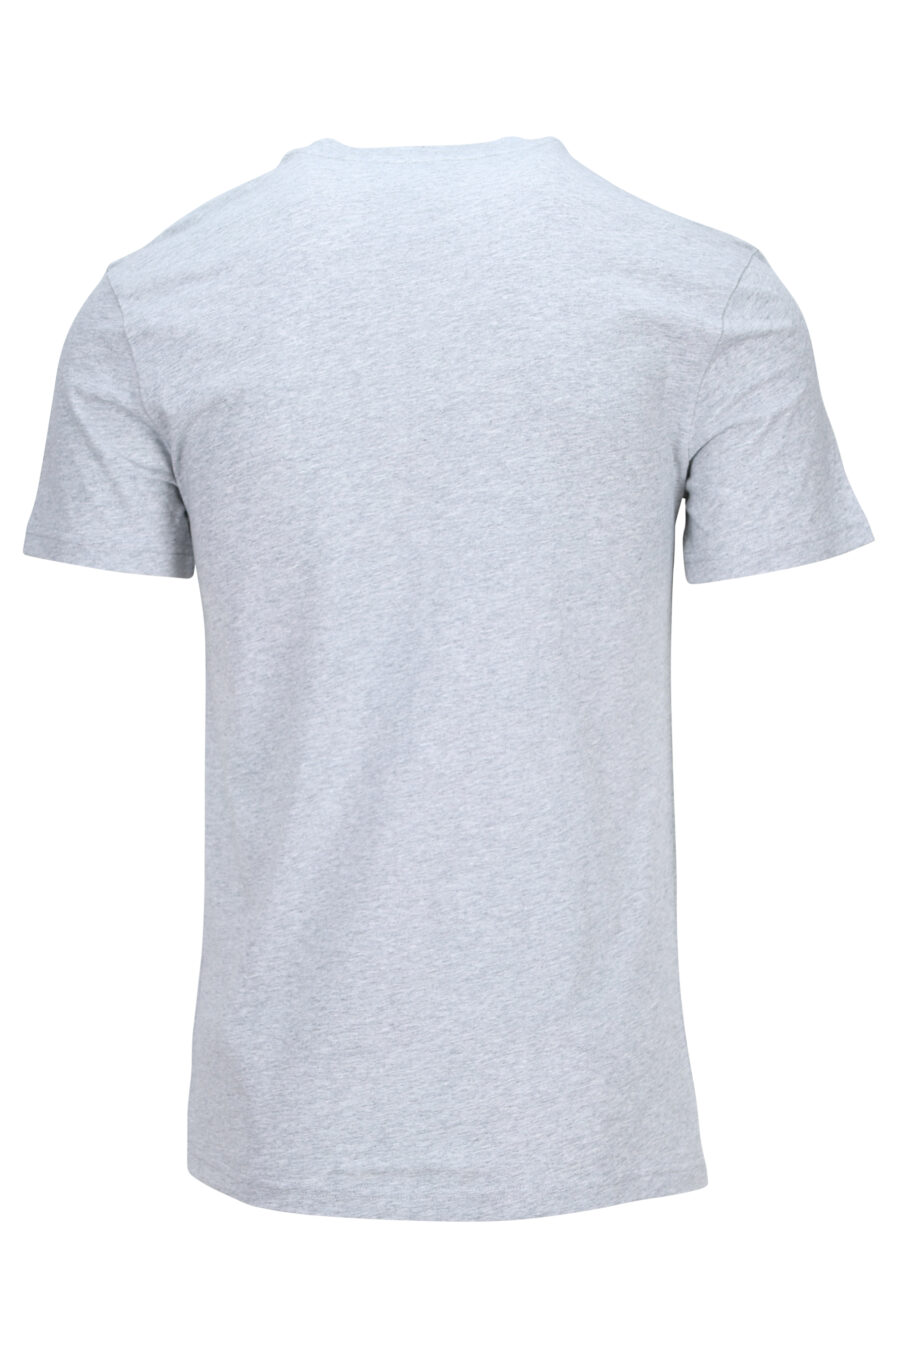 Camiseta gris con maxilogo "couture milano" - 889316936414 1